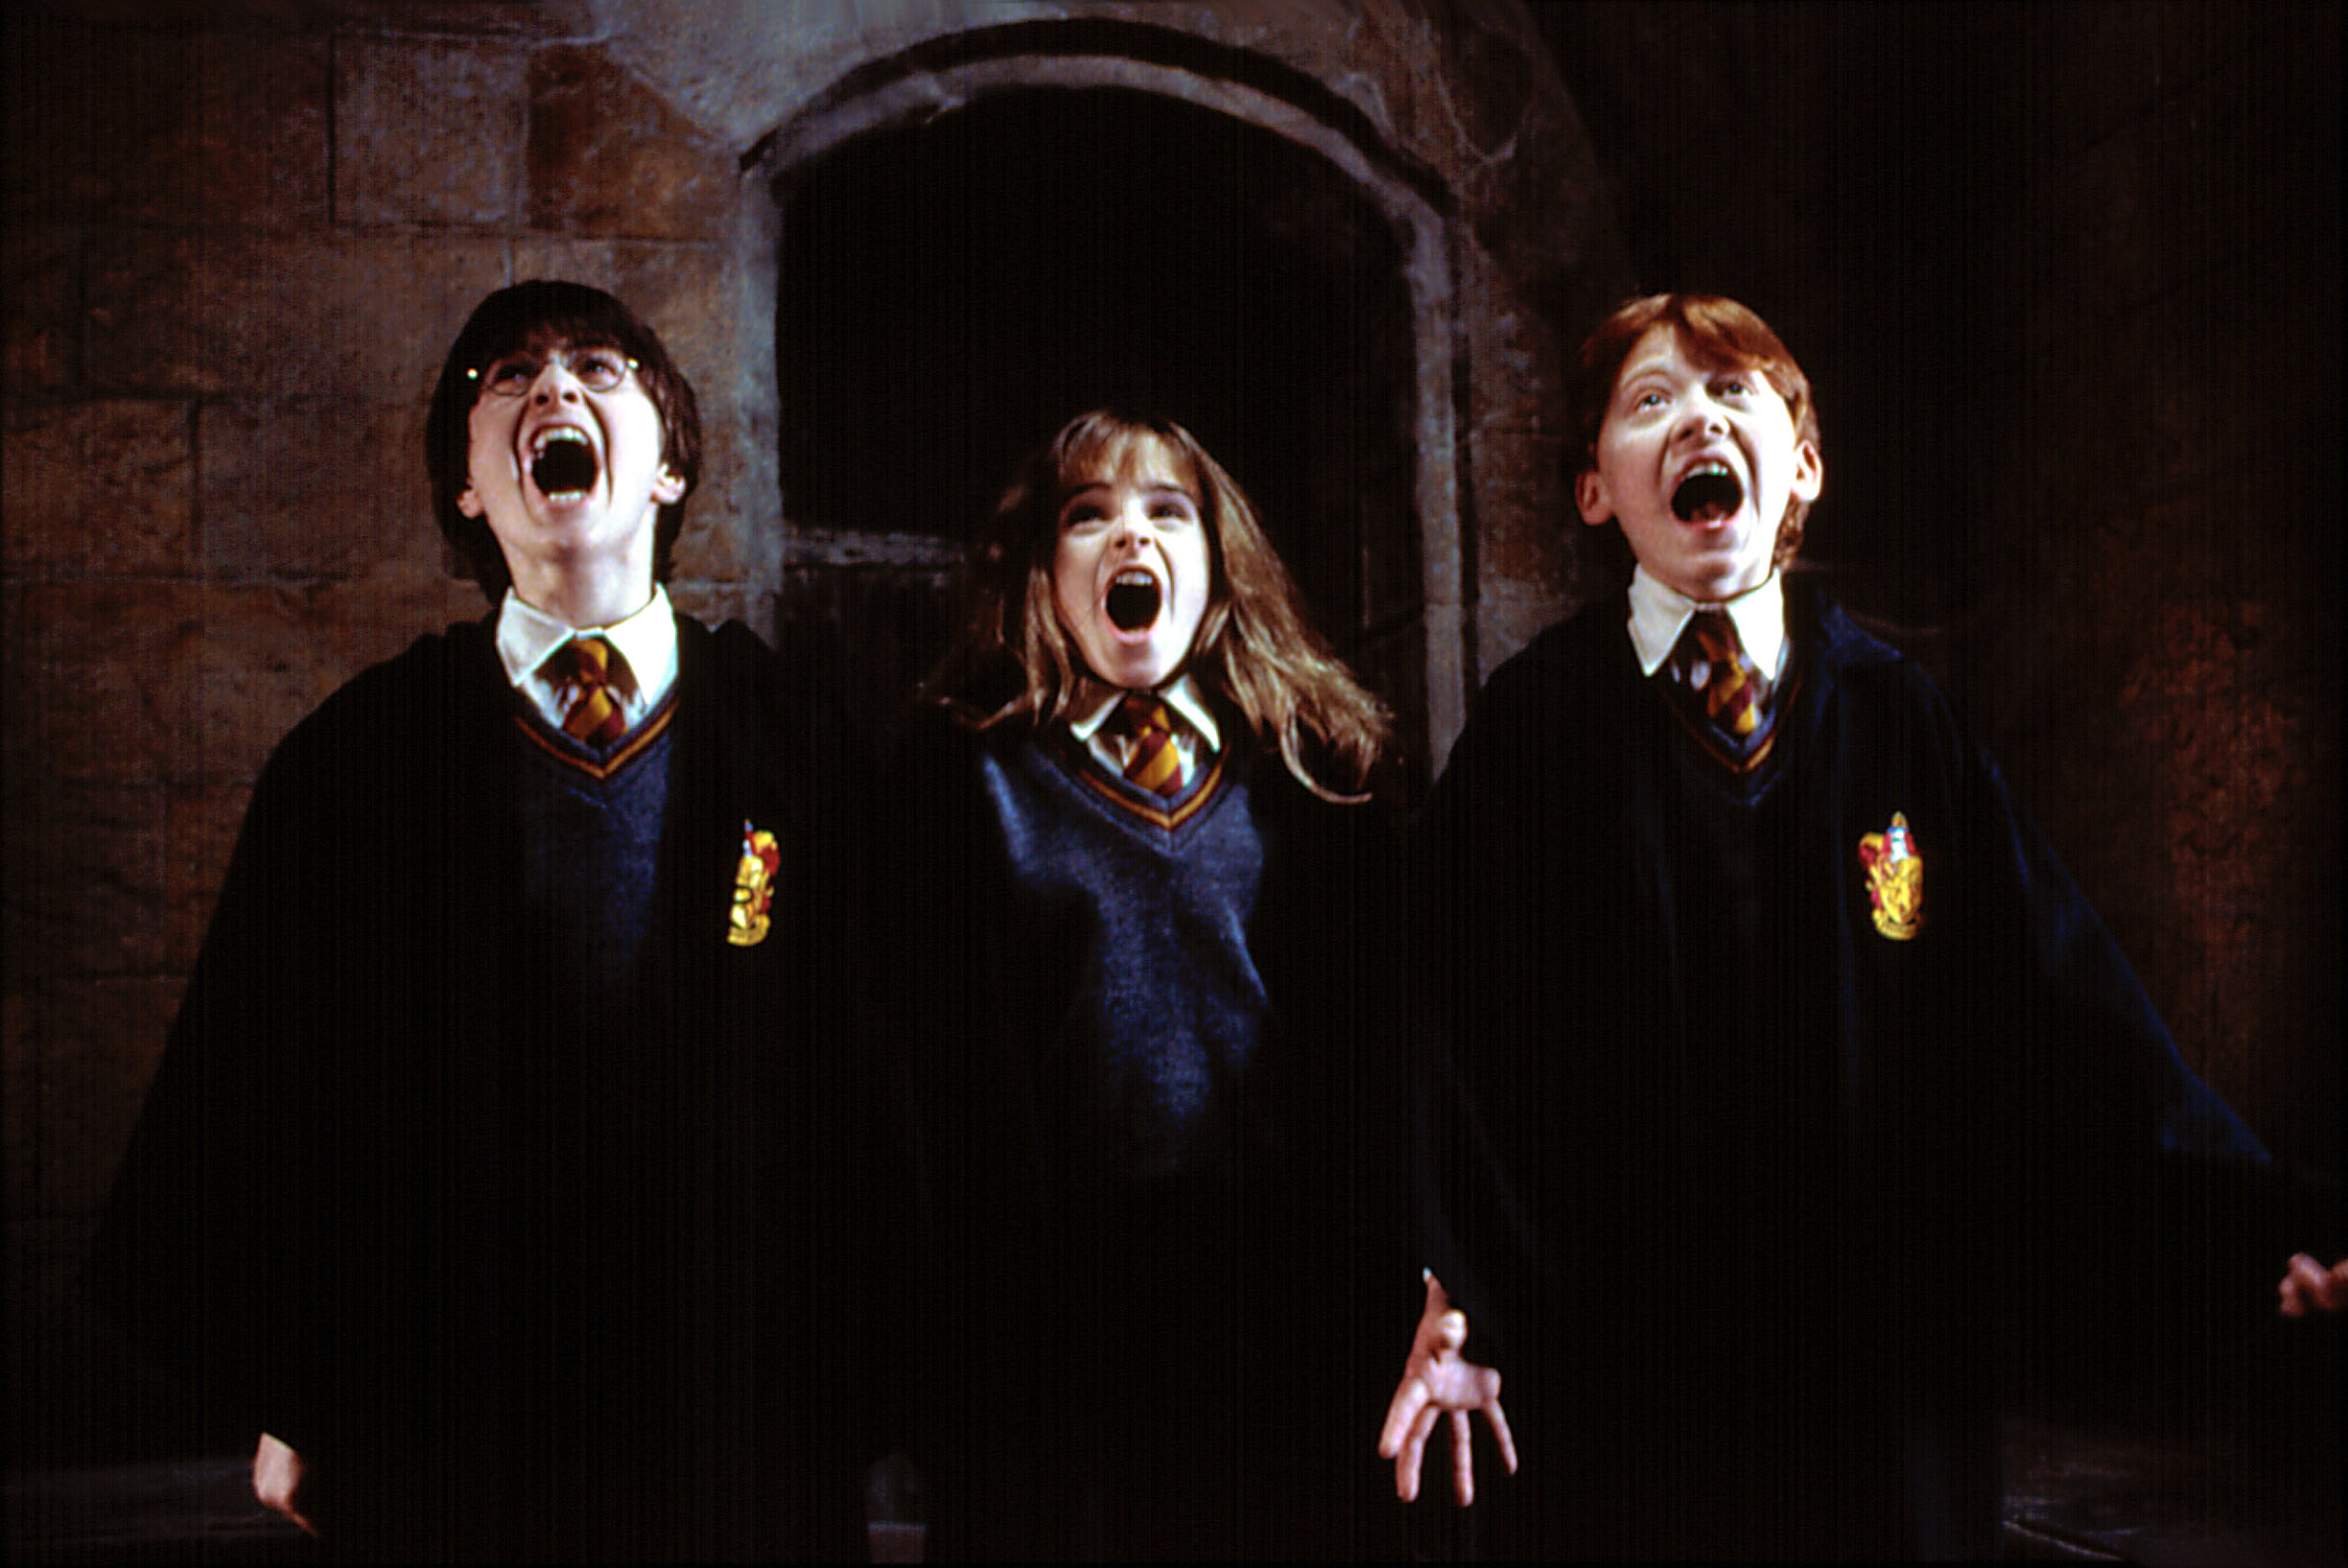 Daniel Radcliffe, Emma Watson, and Rupert Grint screaming